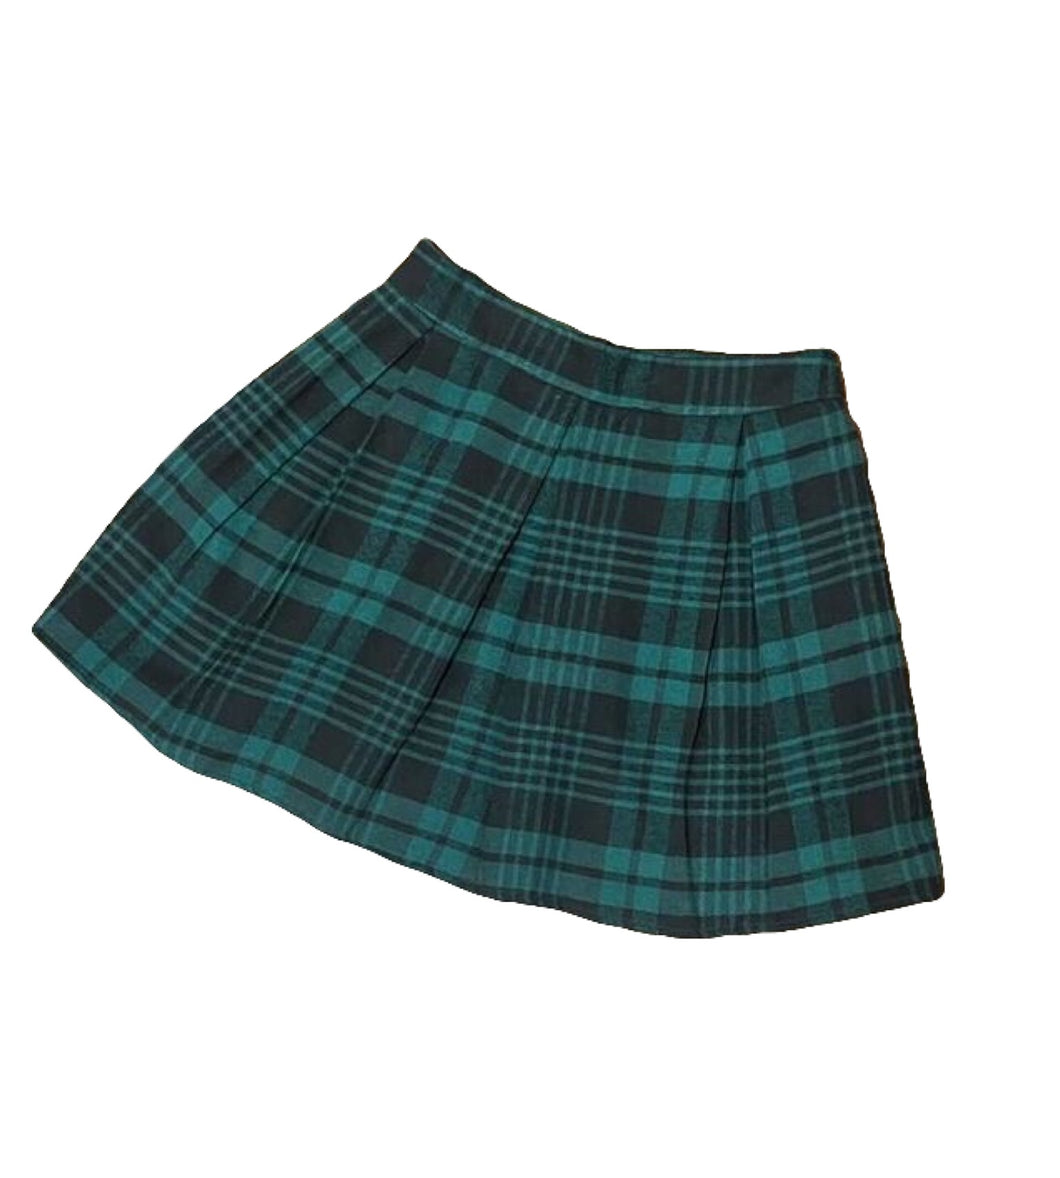 Green with Black Stripe Plaid Mini Skirt